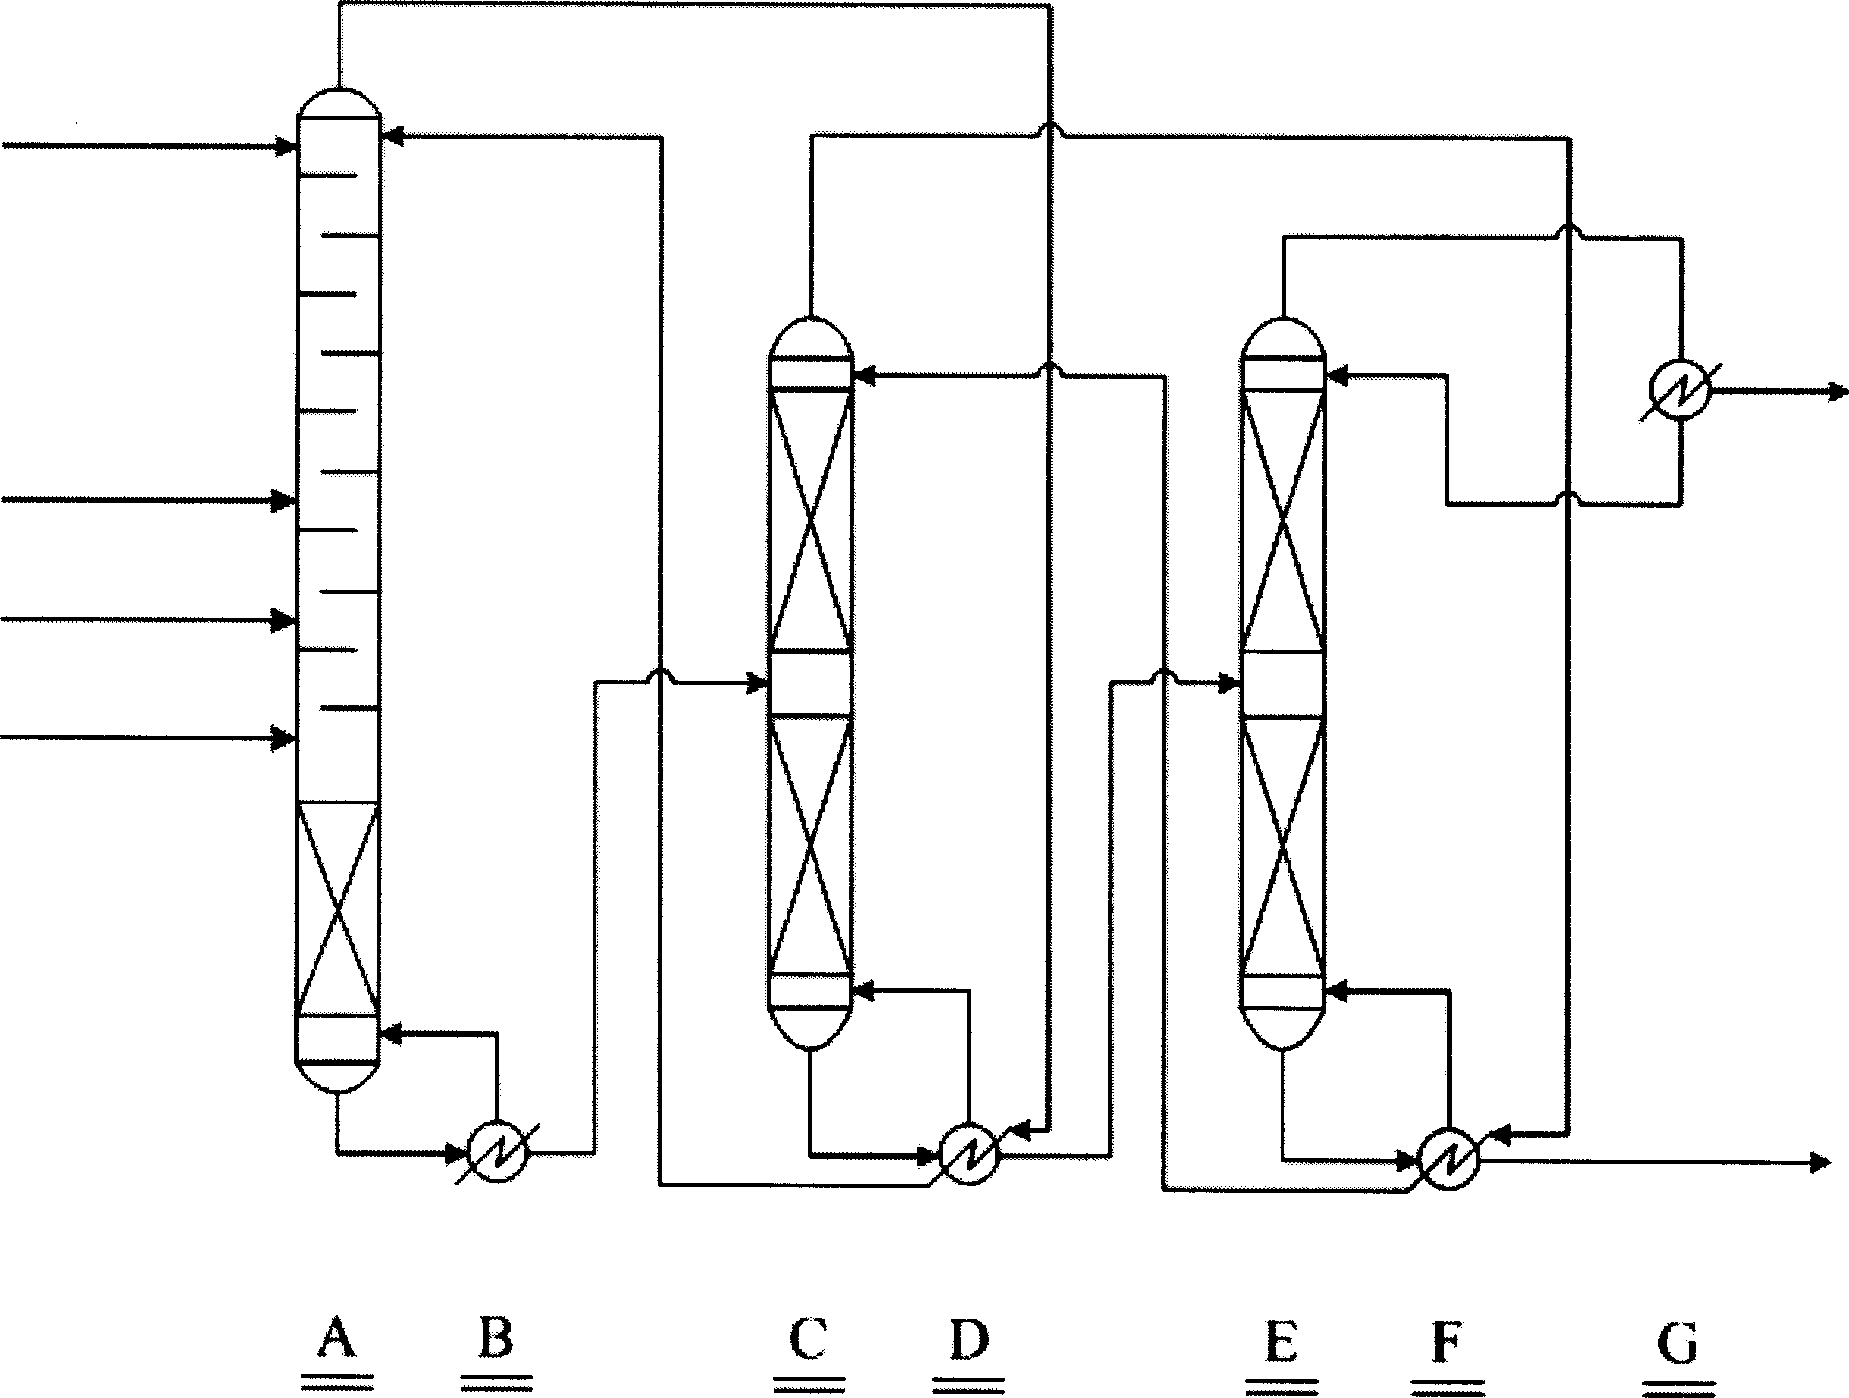 Method for producing glycol by epoxy ethane hydration